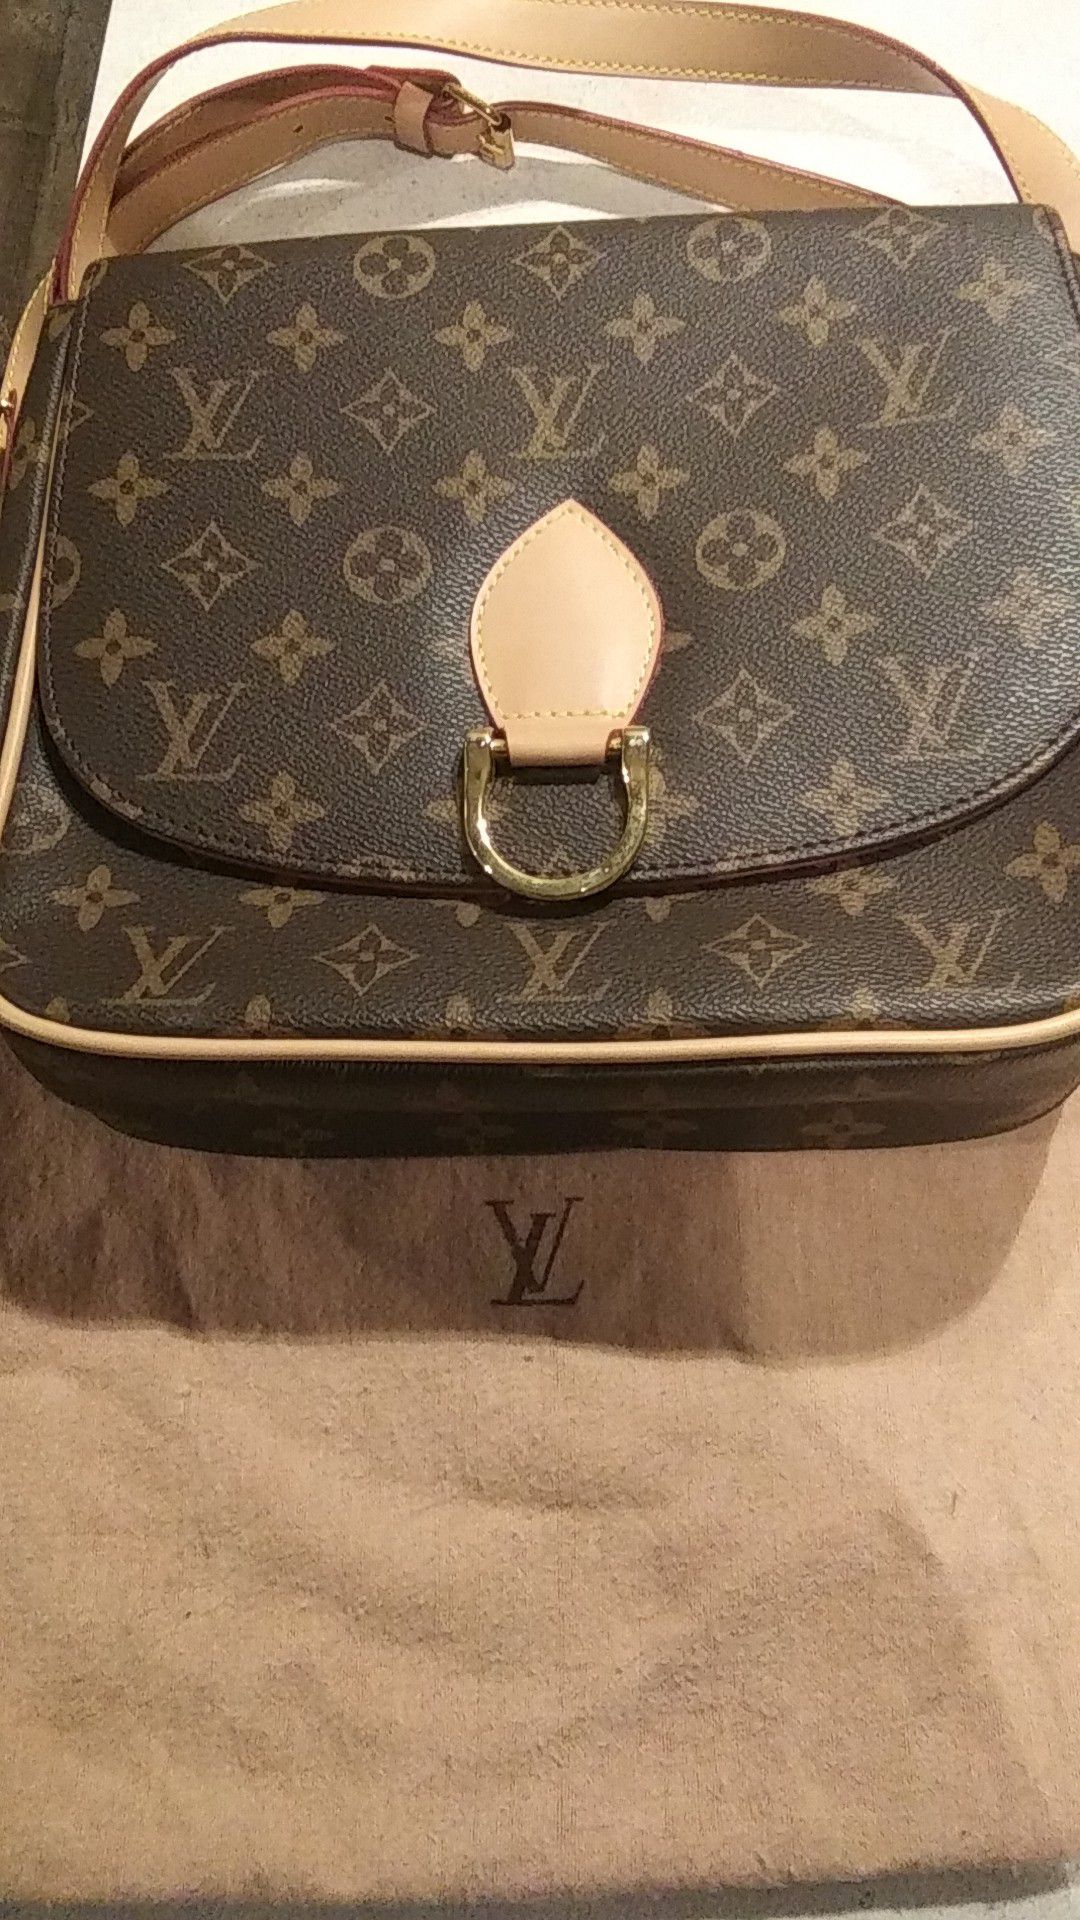 used lv purse